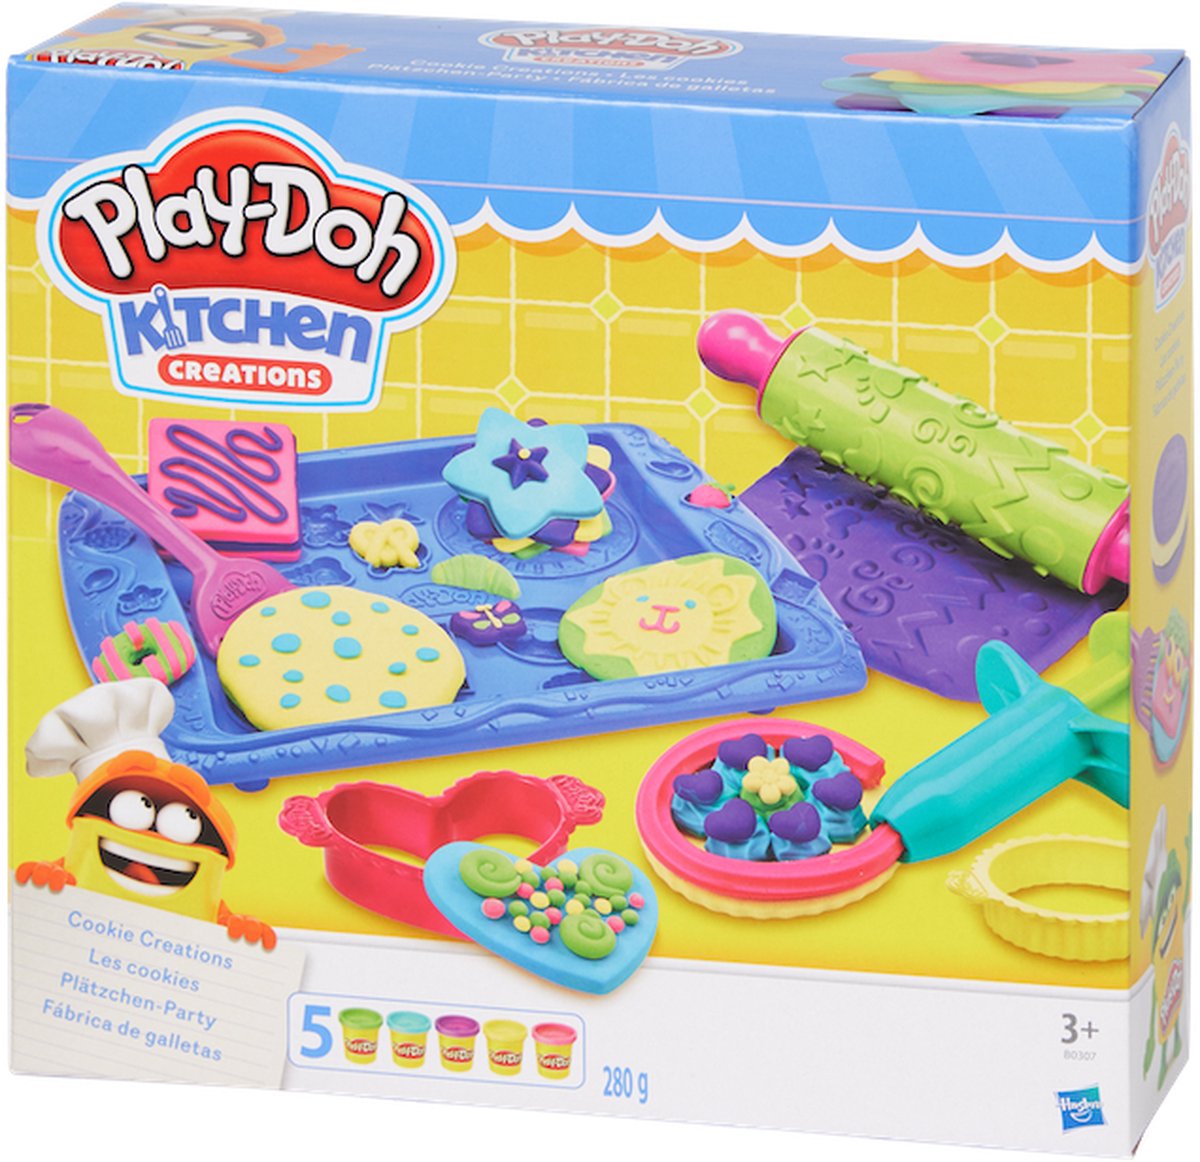 Play-Doh - Speelgoed klei set - Coockie Creations - Speelgoed voor kinderen - Klei speelset